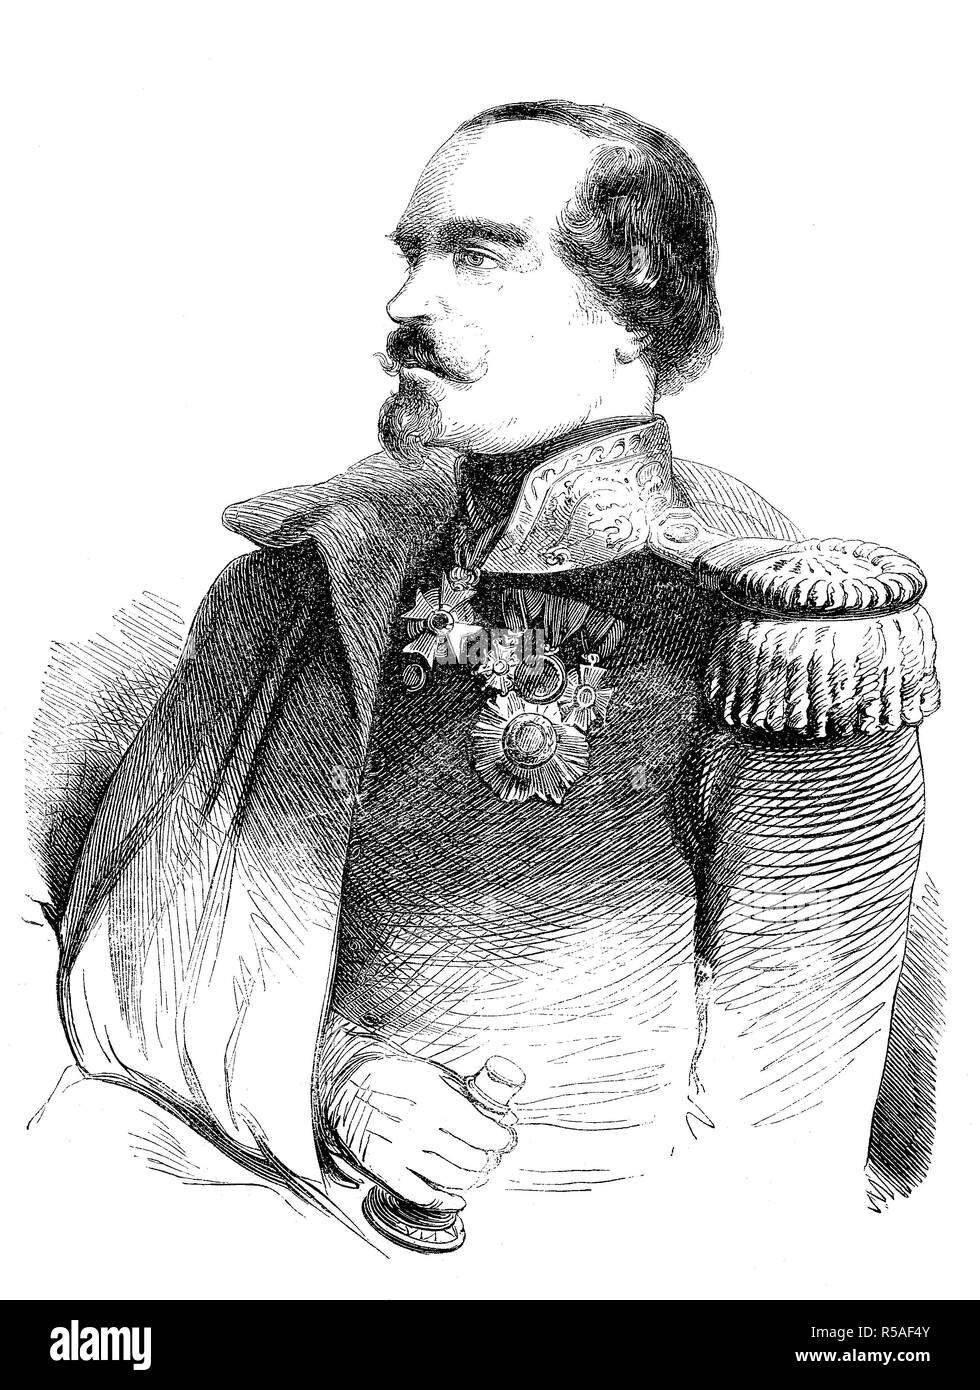 Francois-Marcellin Bestimmte de Canrobert, Juni 27, 1809, 28. Januar 1895, war ein französischer Marschall, Holzschnitt, Frankreich Stockfoto